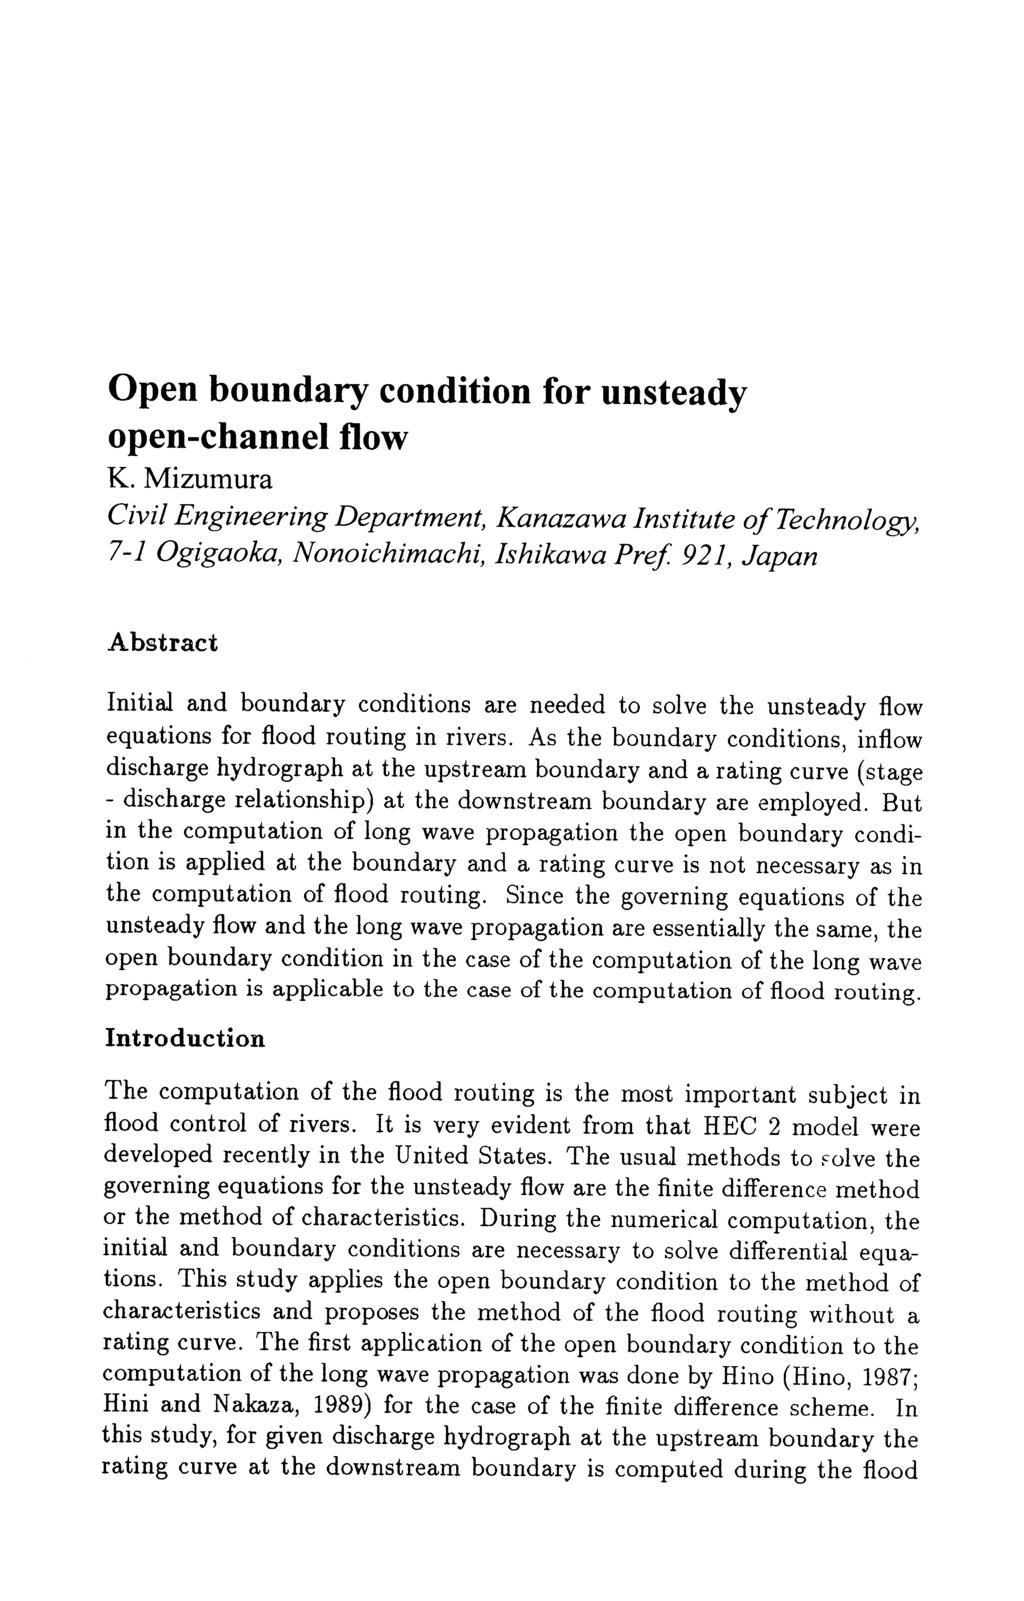 Open boundary condition for unsteady open-channel flow K. Mizumura Civil Engineering Department, Kanazawa Institute of Technology, 7-1 Ogigaoka, Nonoichimachi, Ishikawa Pref.